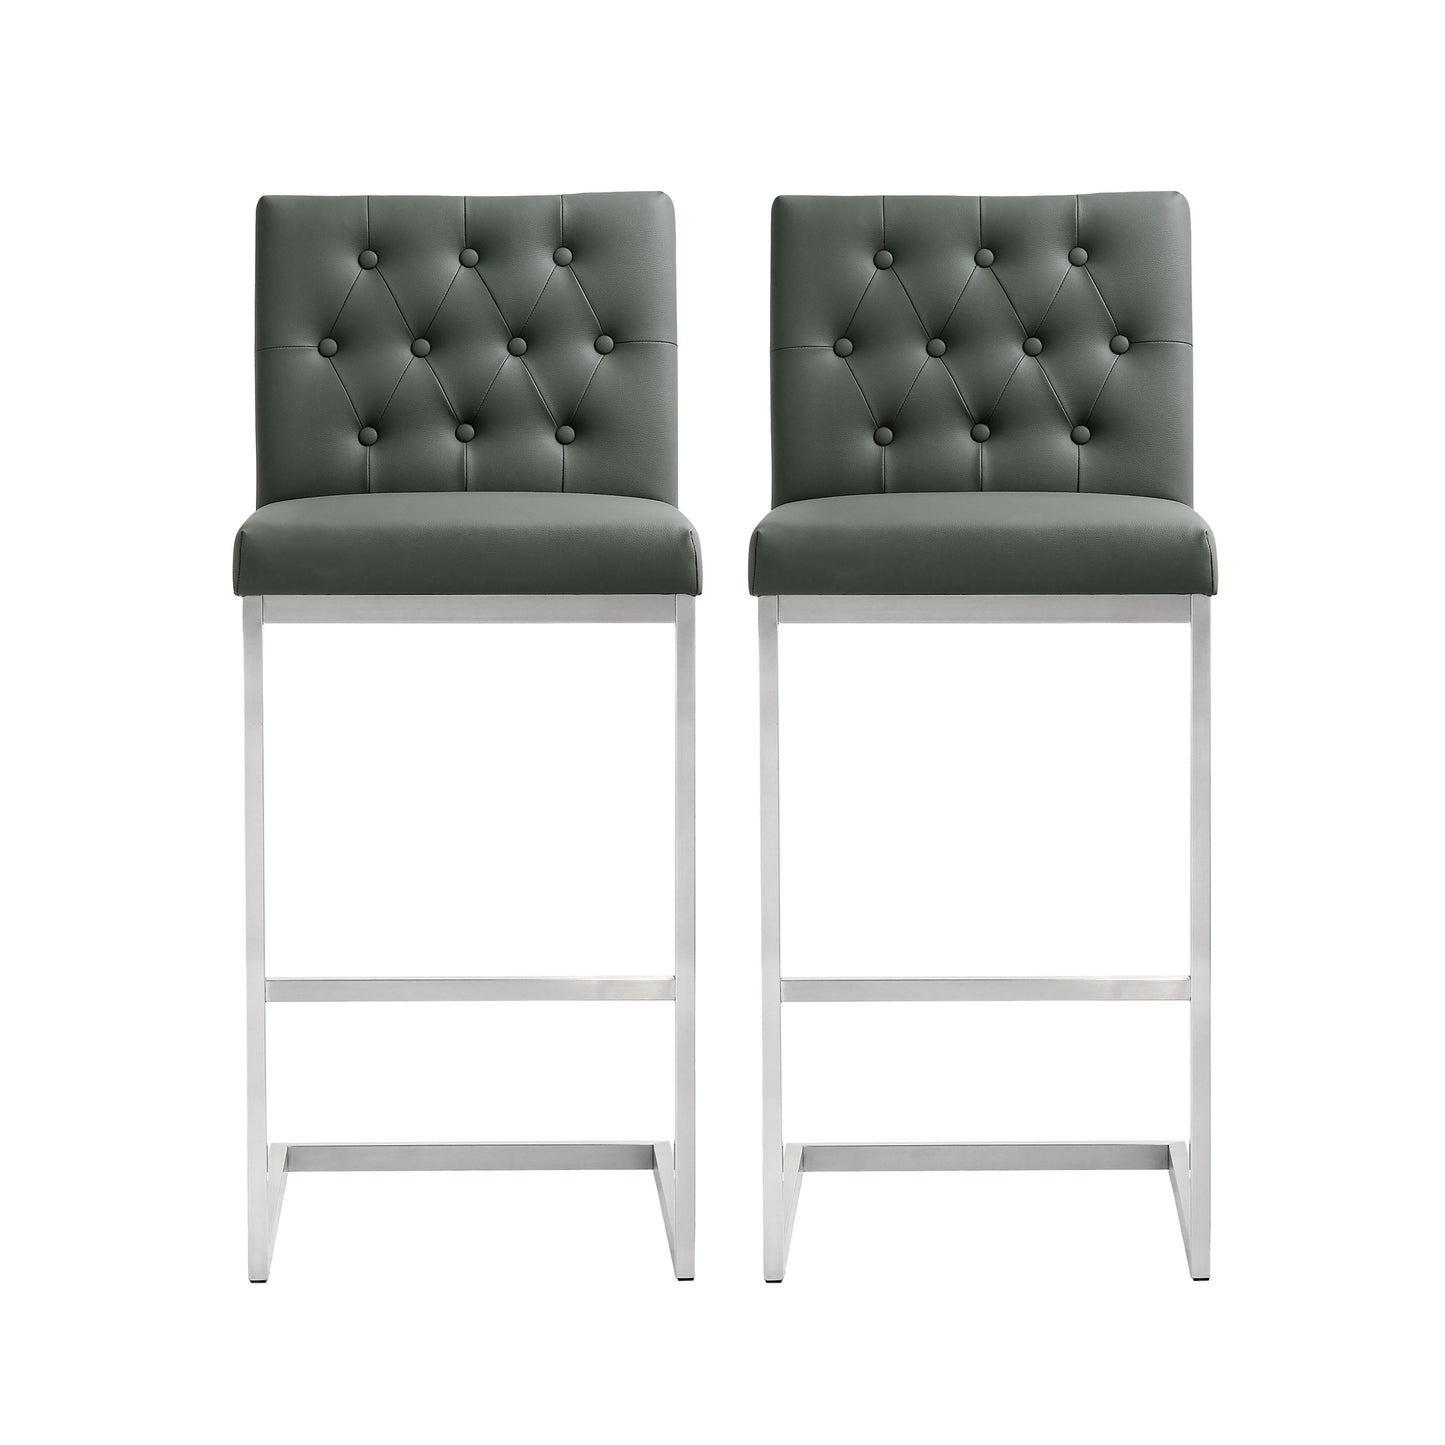 Tov Furniture Helsinki Grey Stainless Steel Barstool  Set of 2